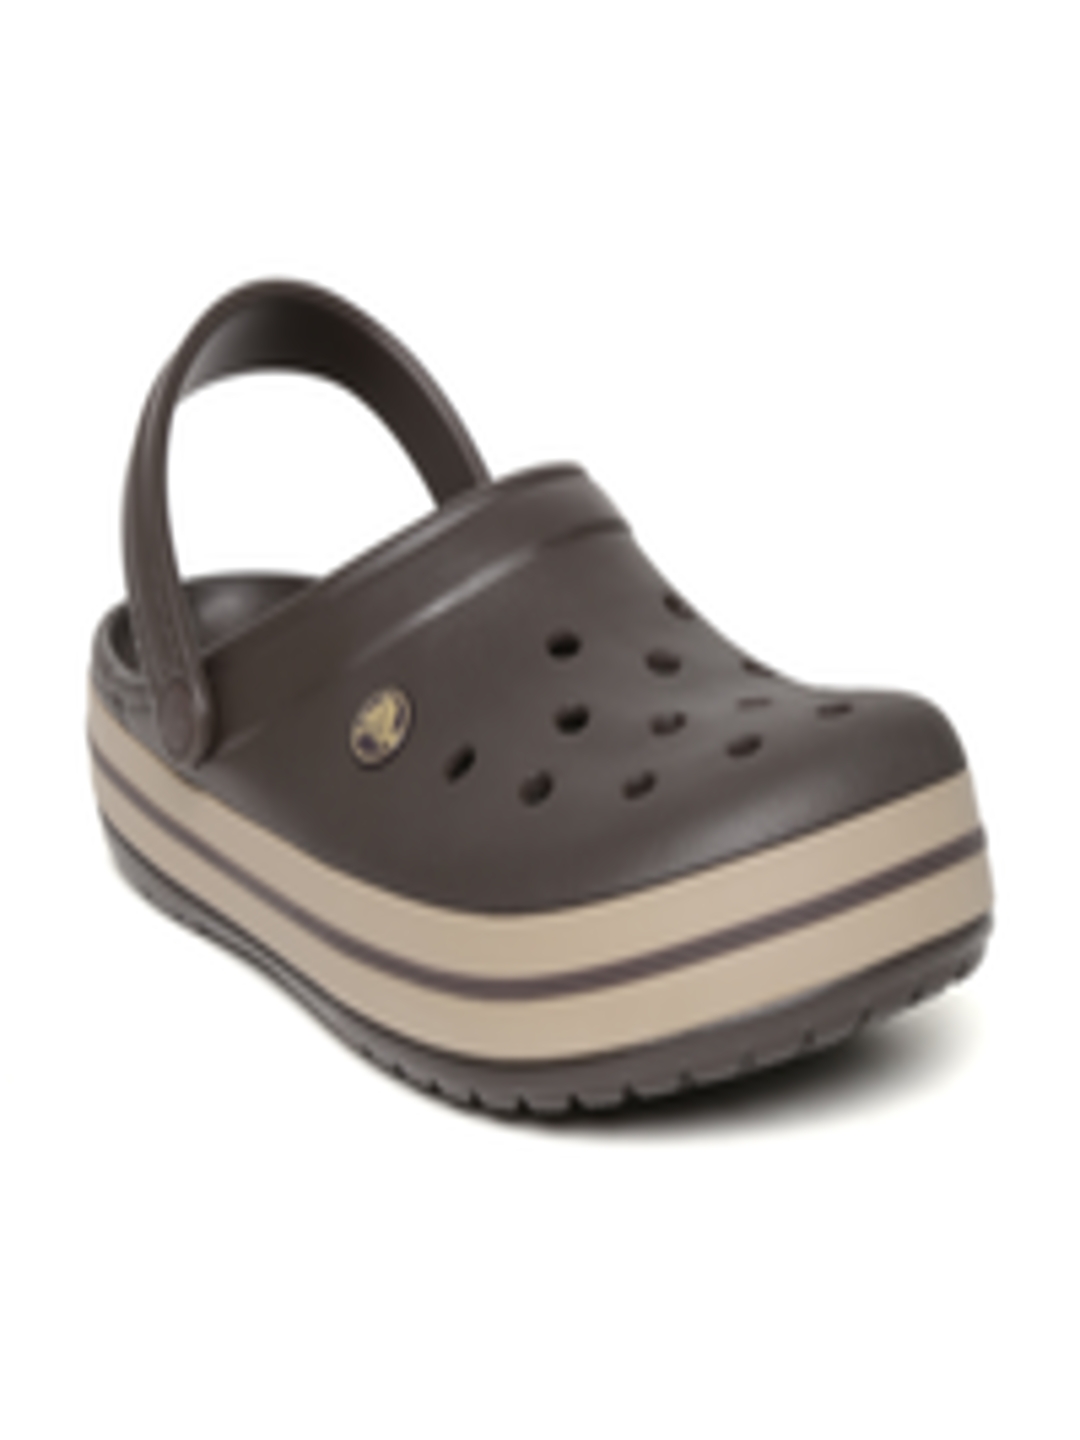 Buy Crocs Unisex Brown Clogs - Sandals for Unisex 719928 | Myntra